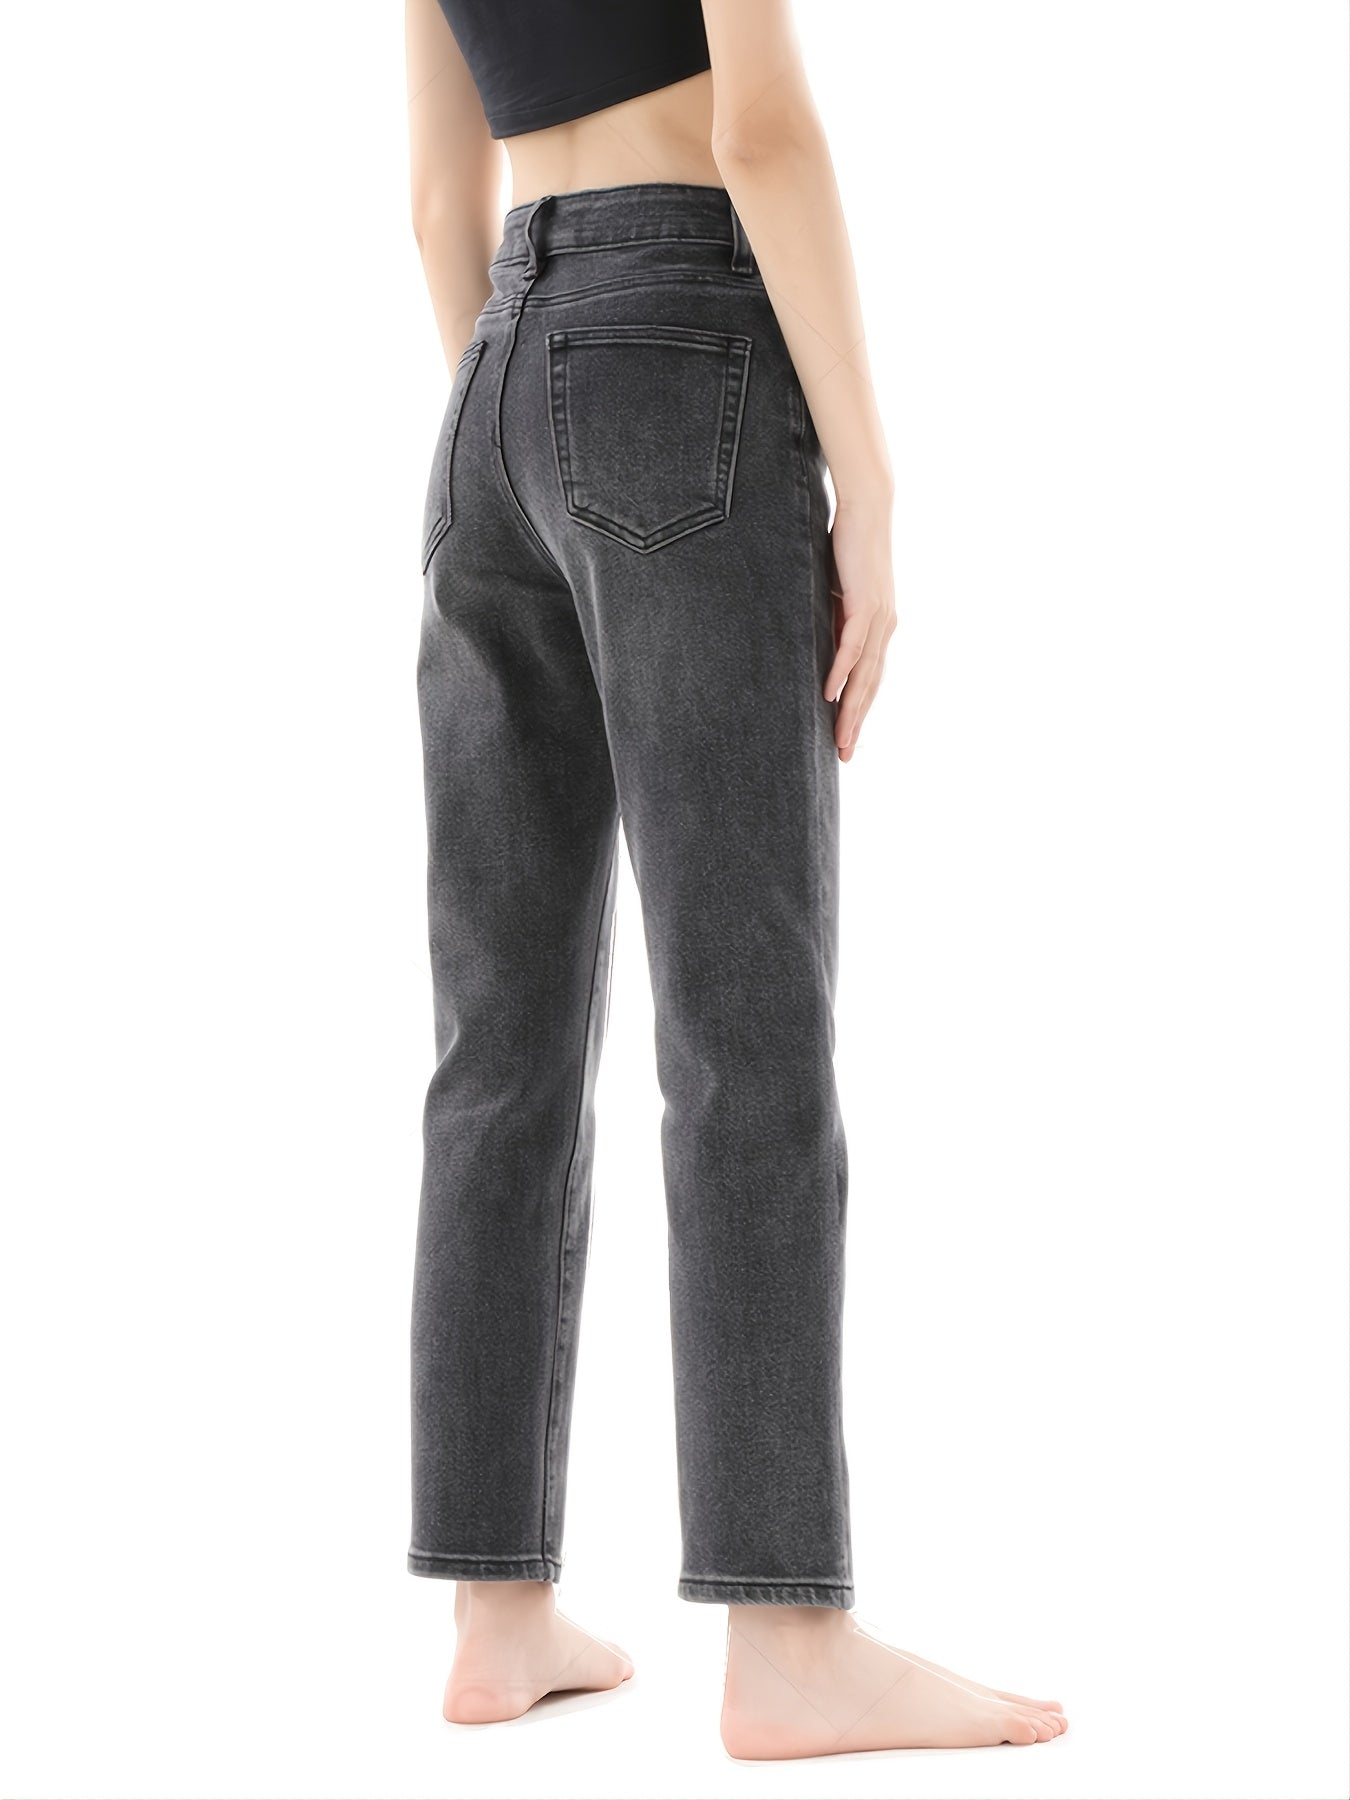 「lovevop」Washed Black Tapered Denim Pants, Classic Slant Pocket Denim Pants, Women's Clothing & Denim